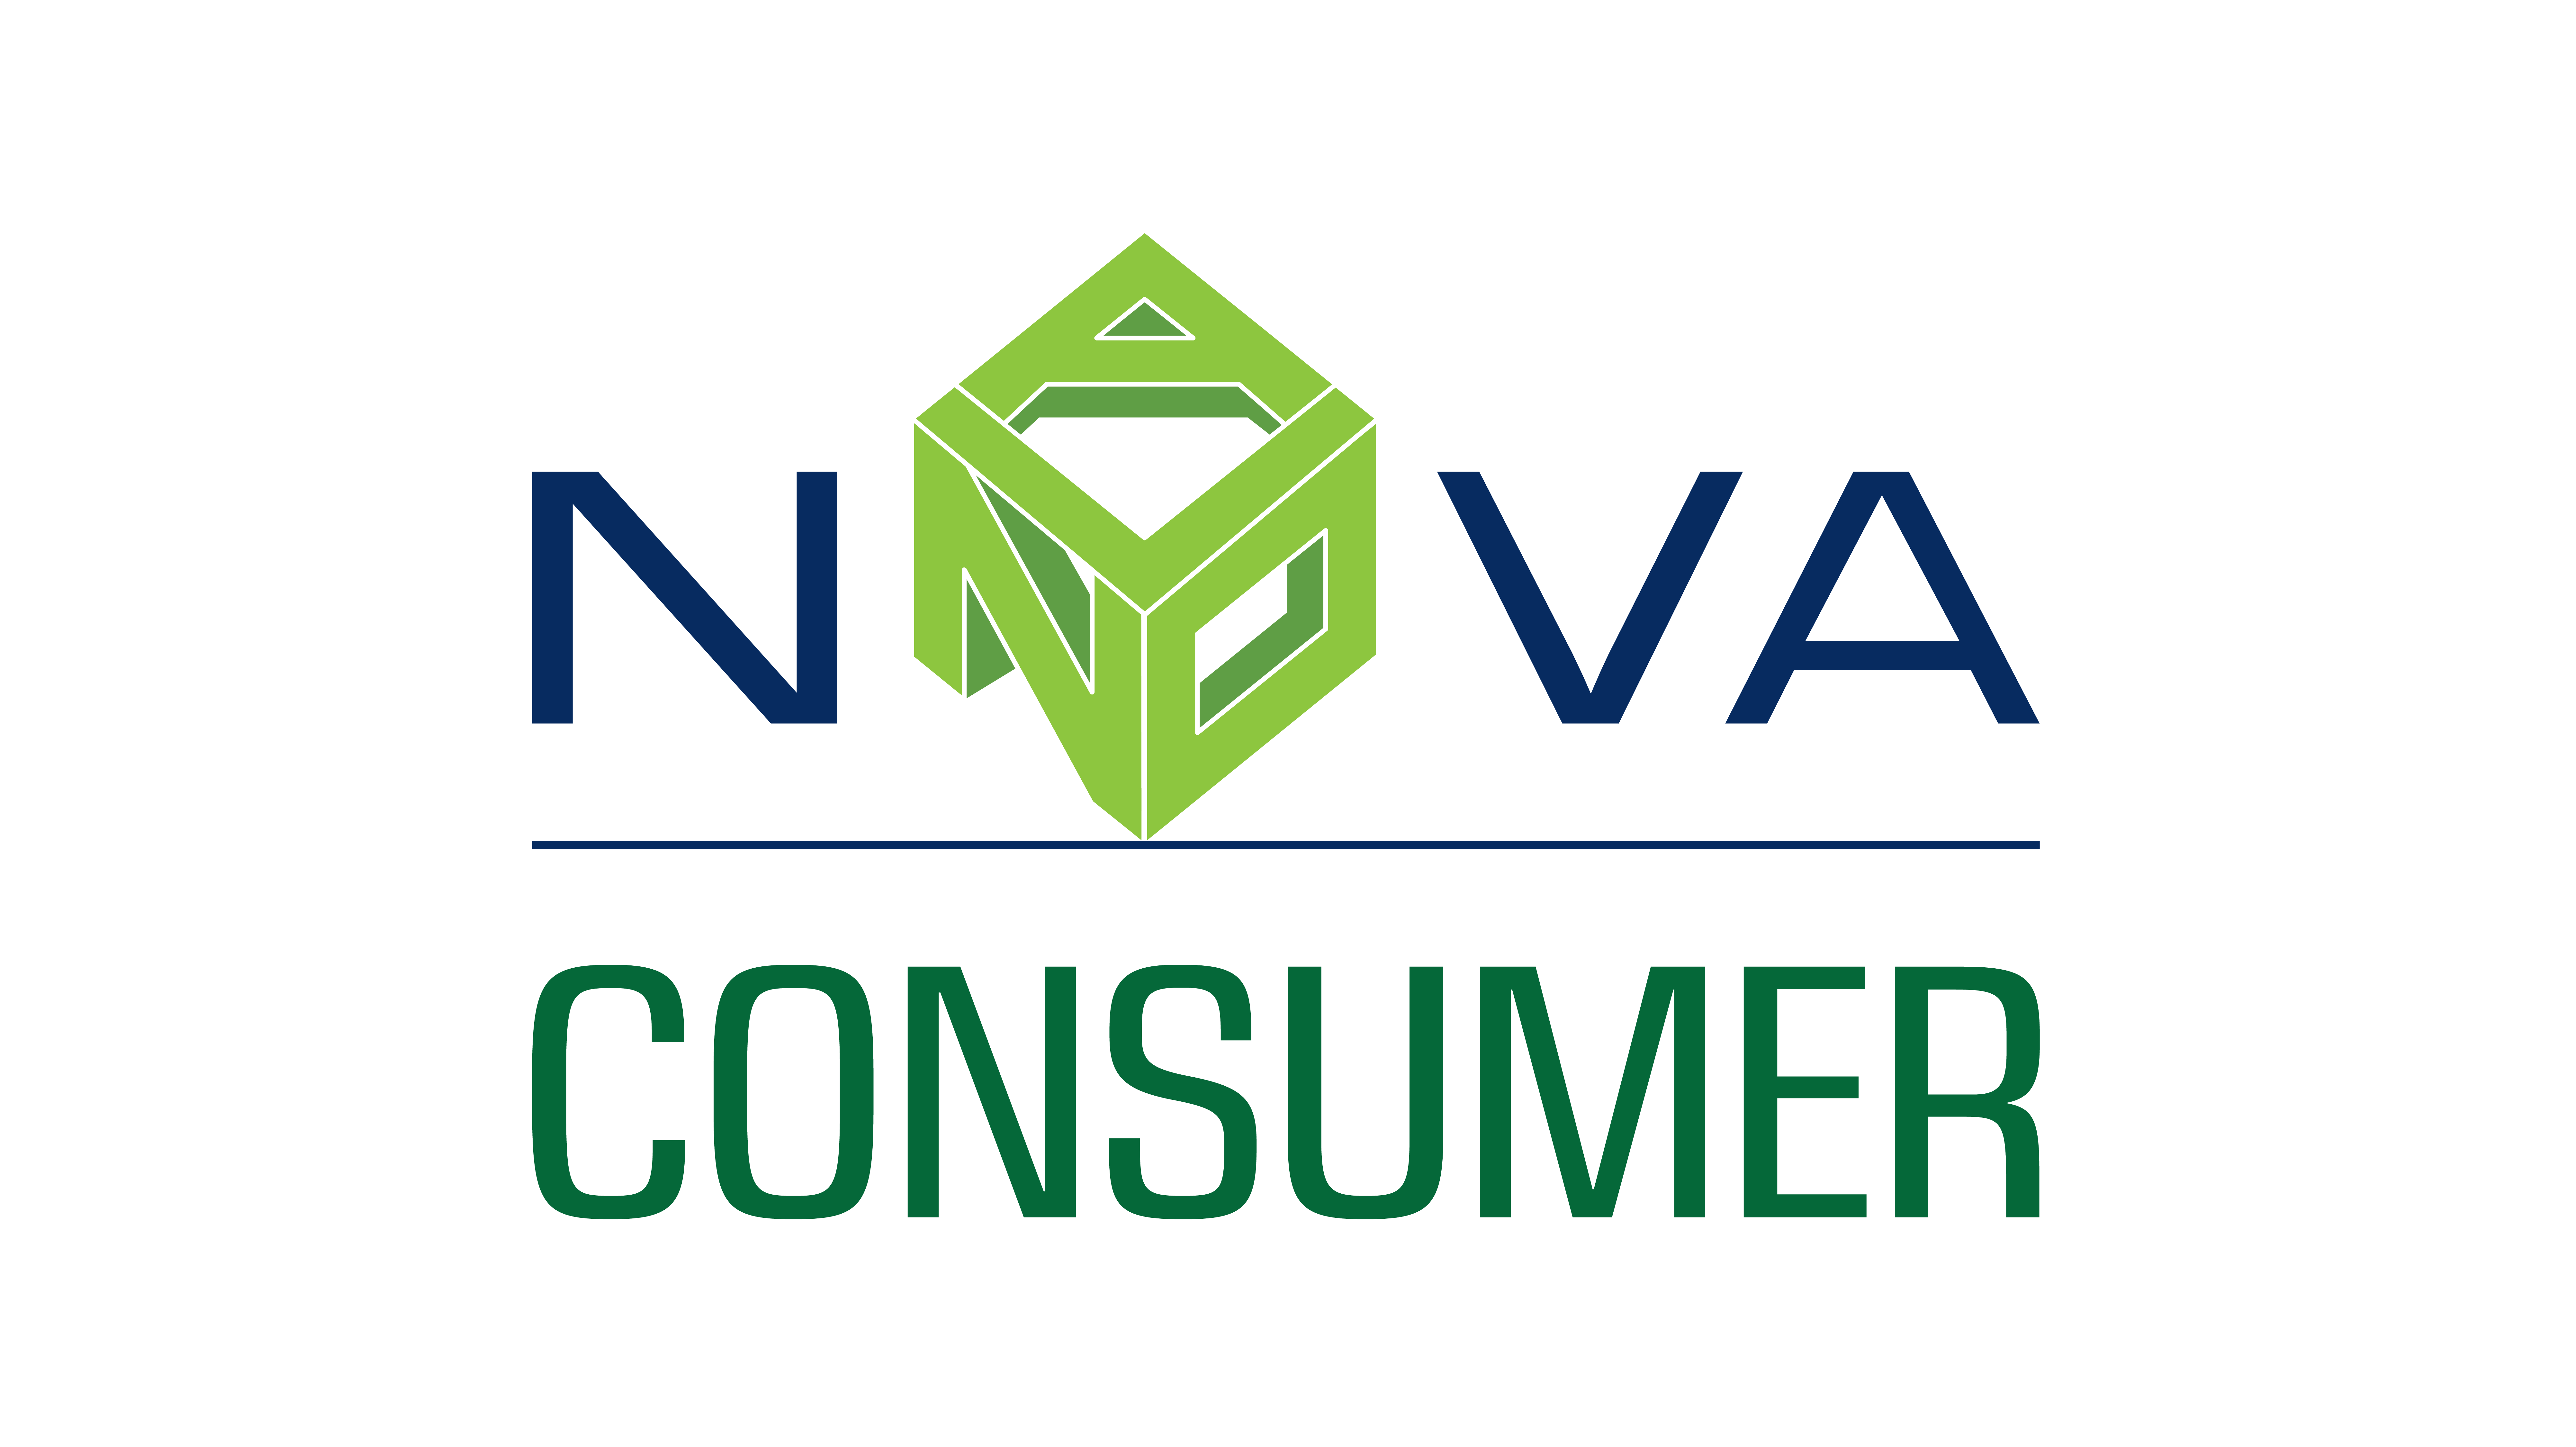 Video giới thiệu Nova Consumer Group